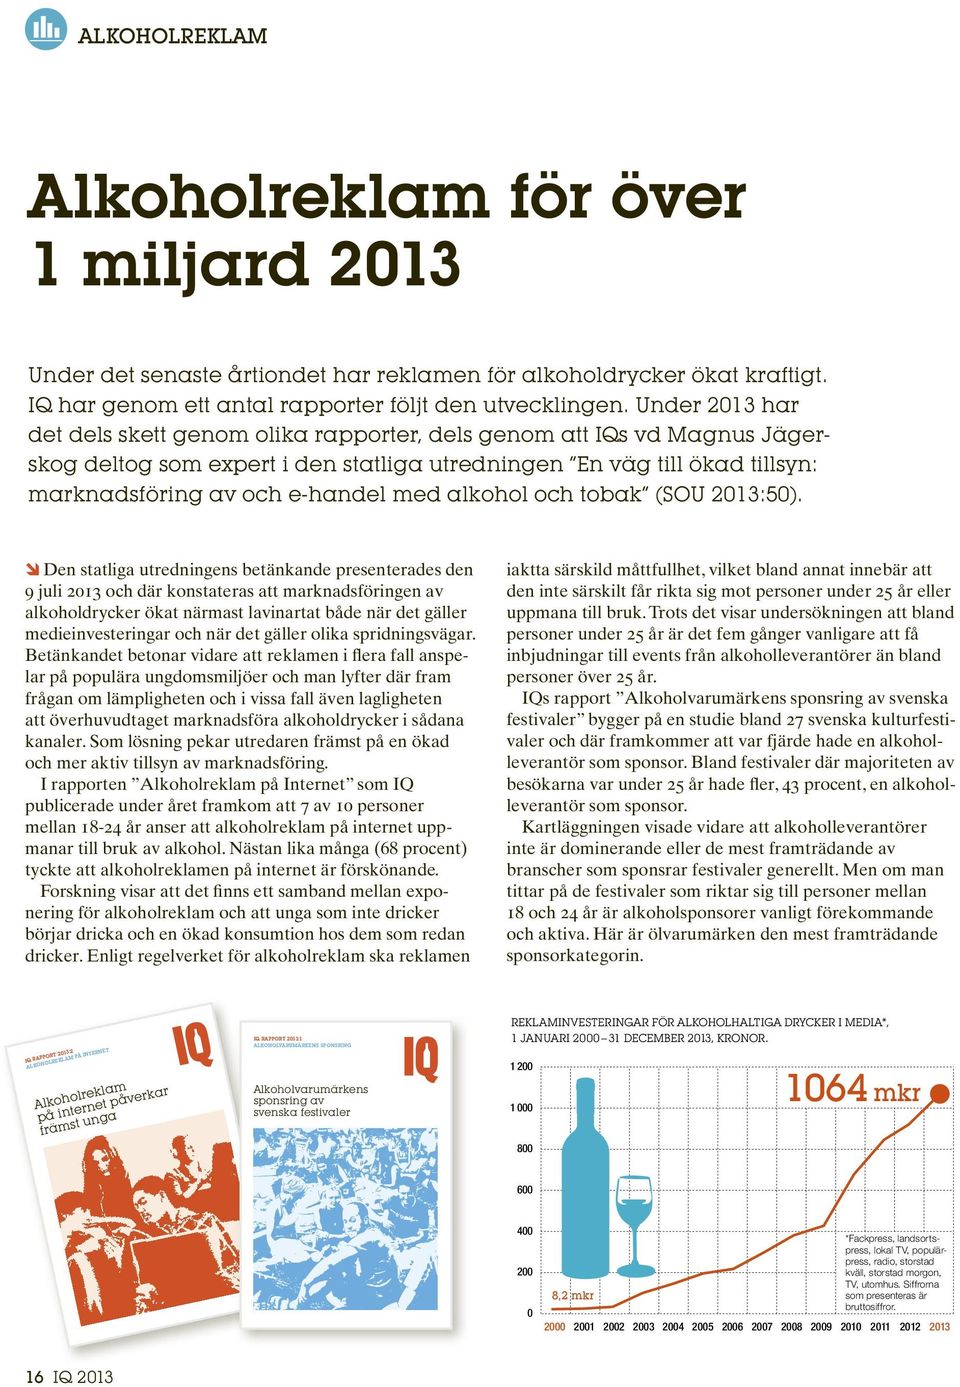 alkohol och tobak (SOU 2013:50).